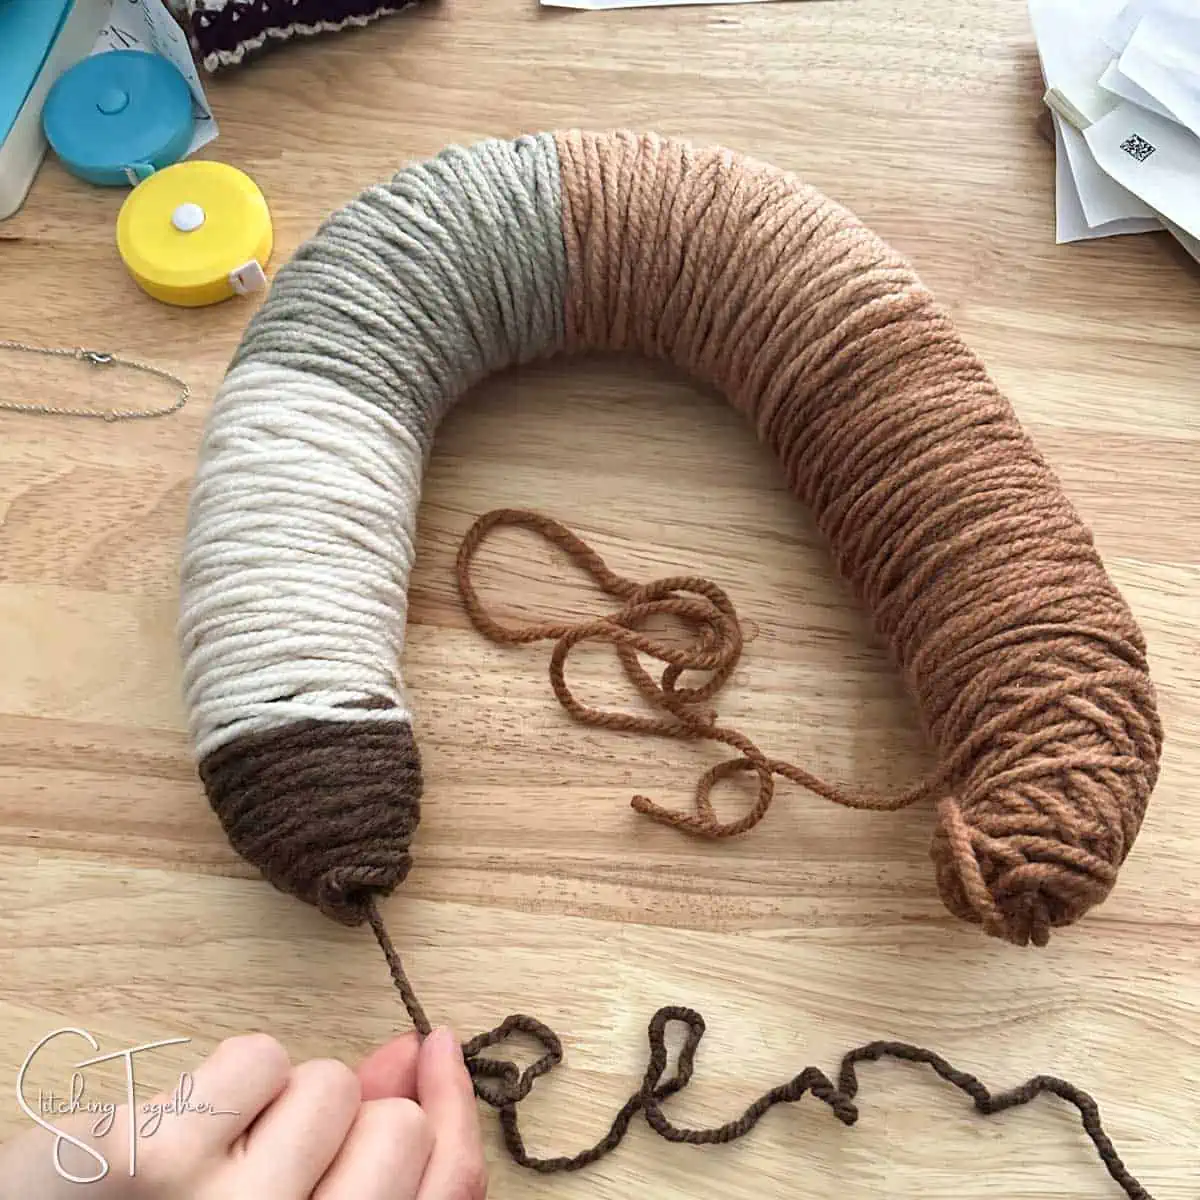 yarn being pulled from an O'GO yarn ring